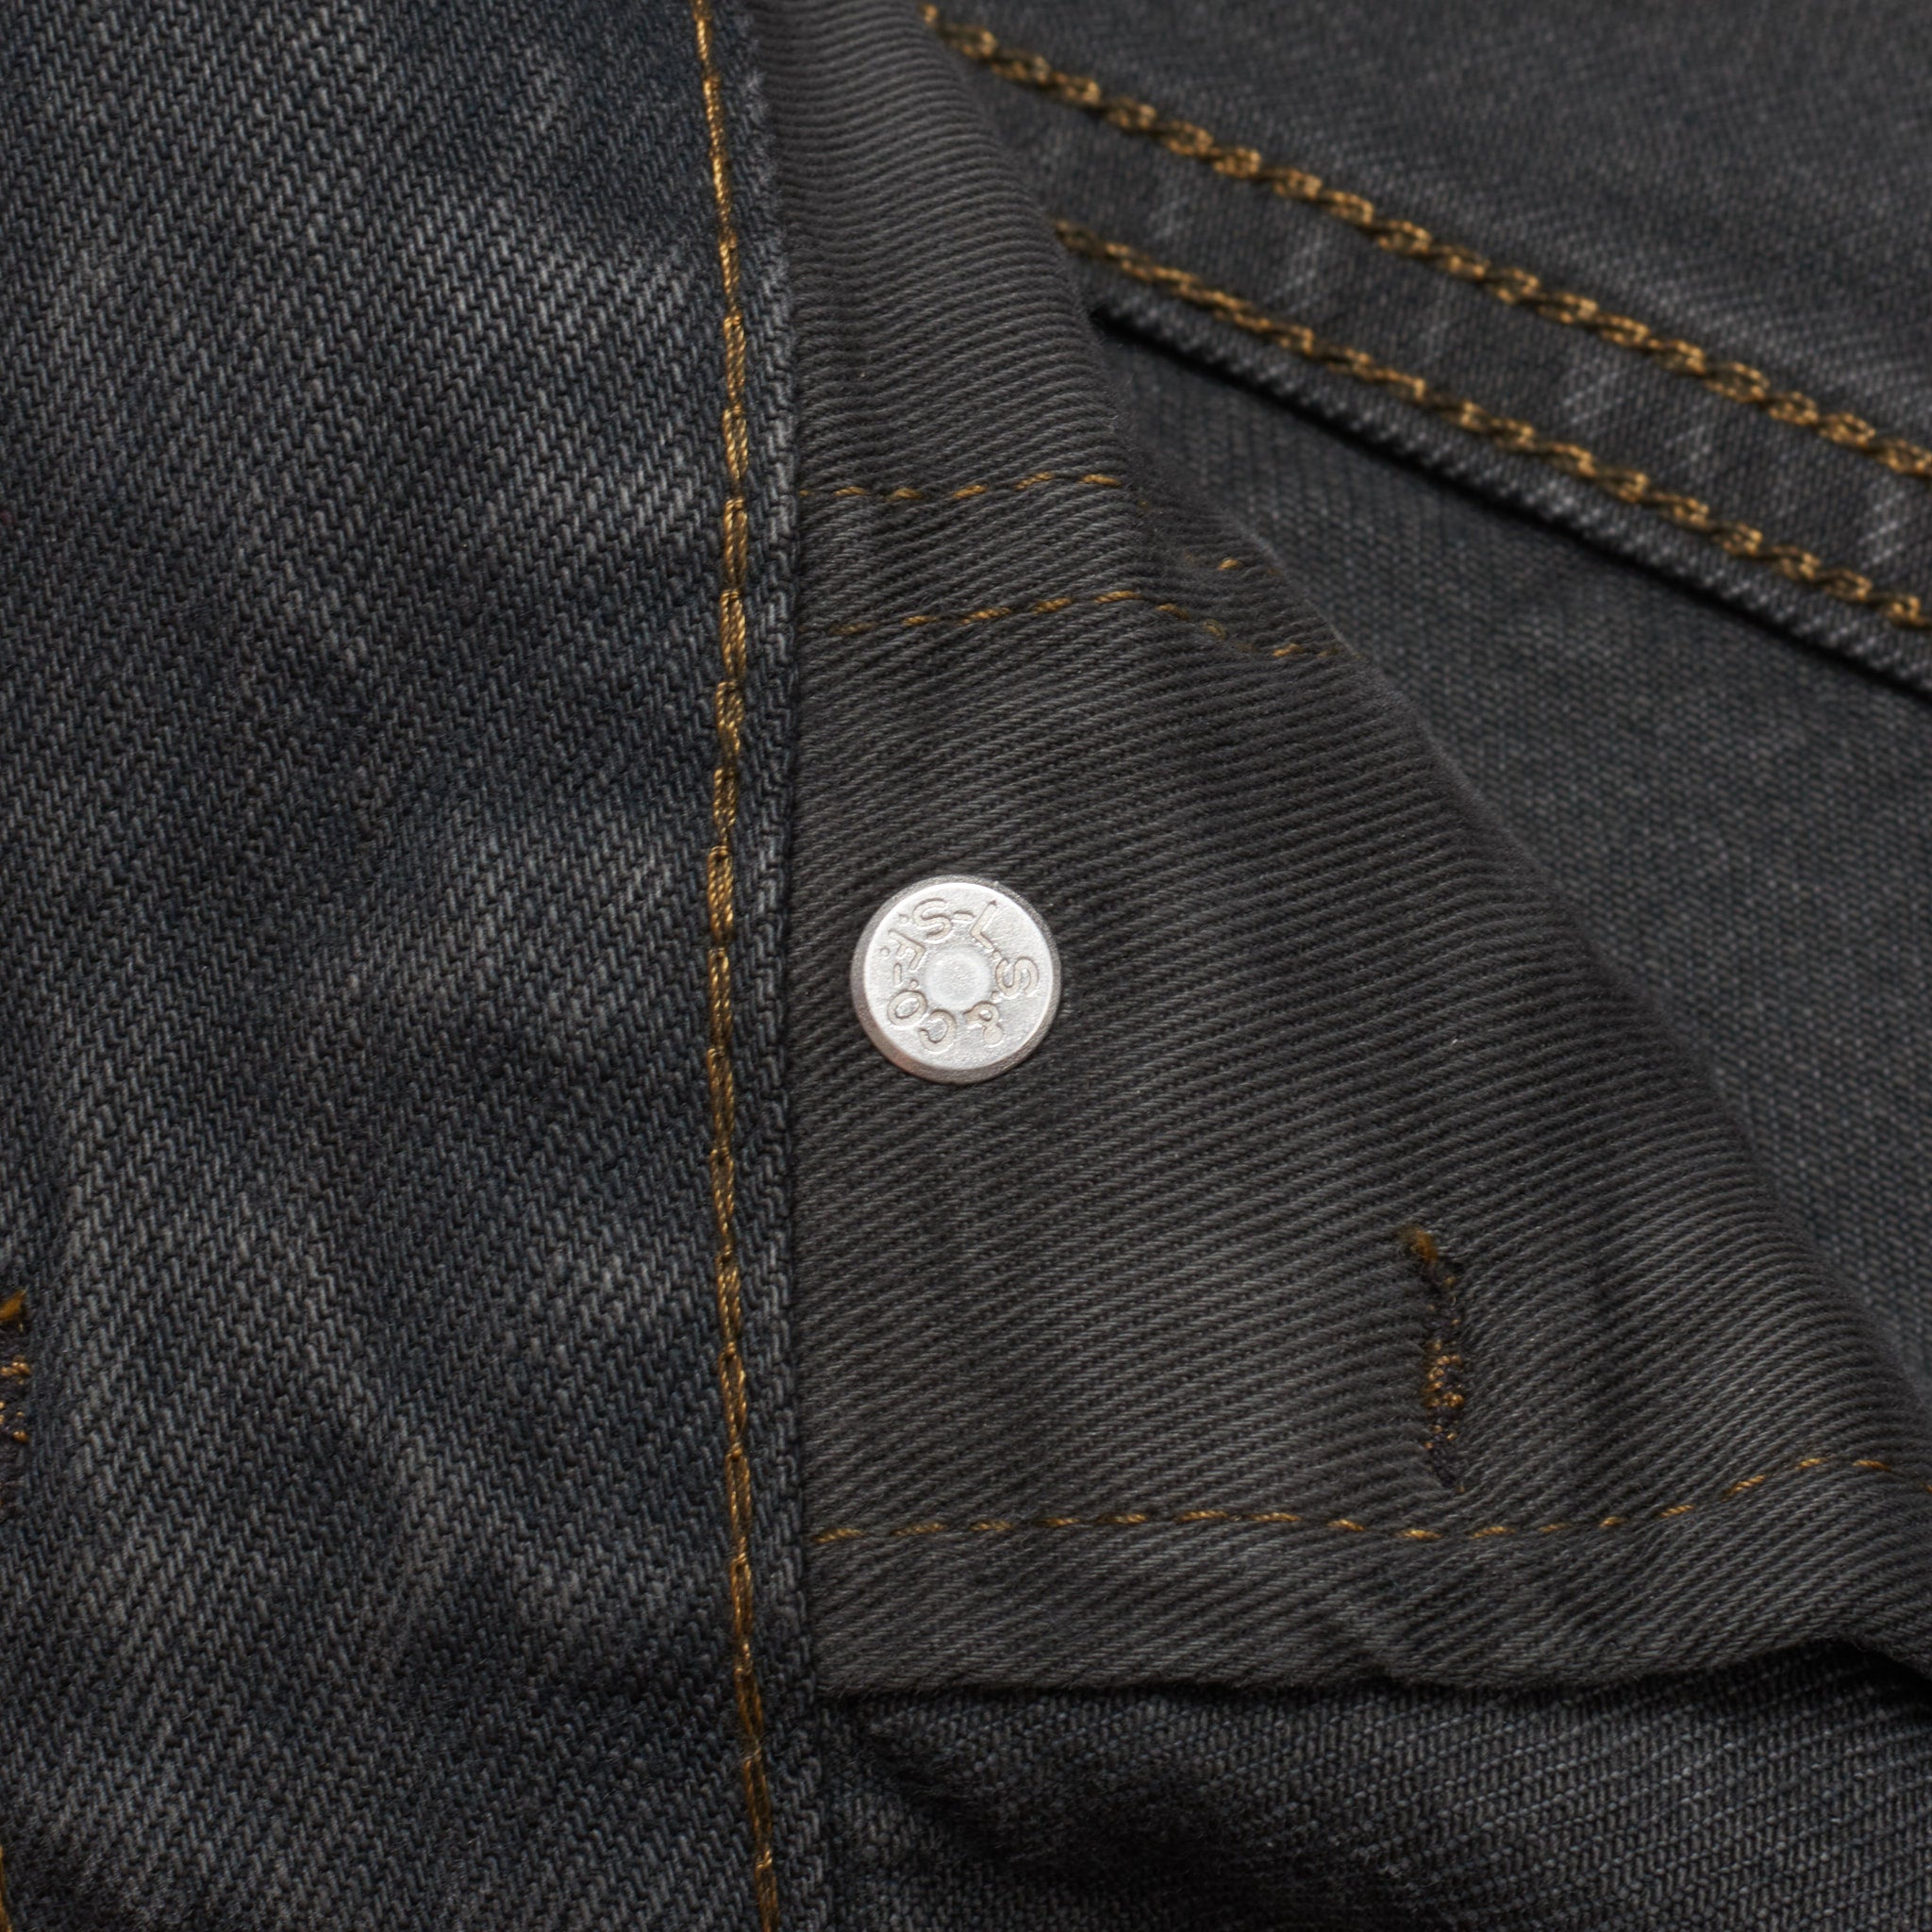 LEVI'S Vintage Clothing 501-0217 Dark Gray Denim Slim Straight Fit Jeans W33 L32 LEVI'S